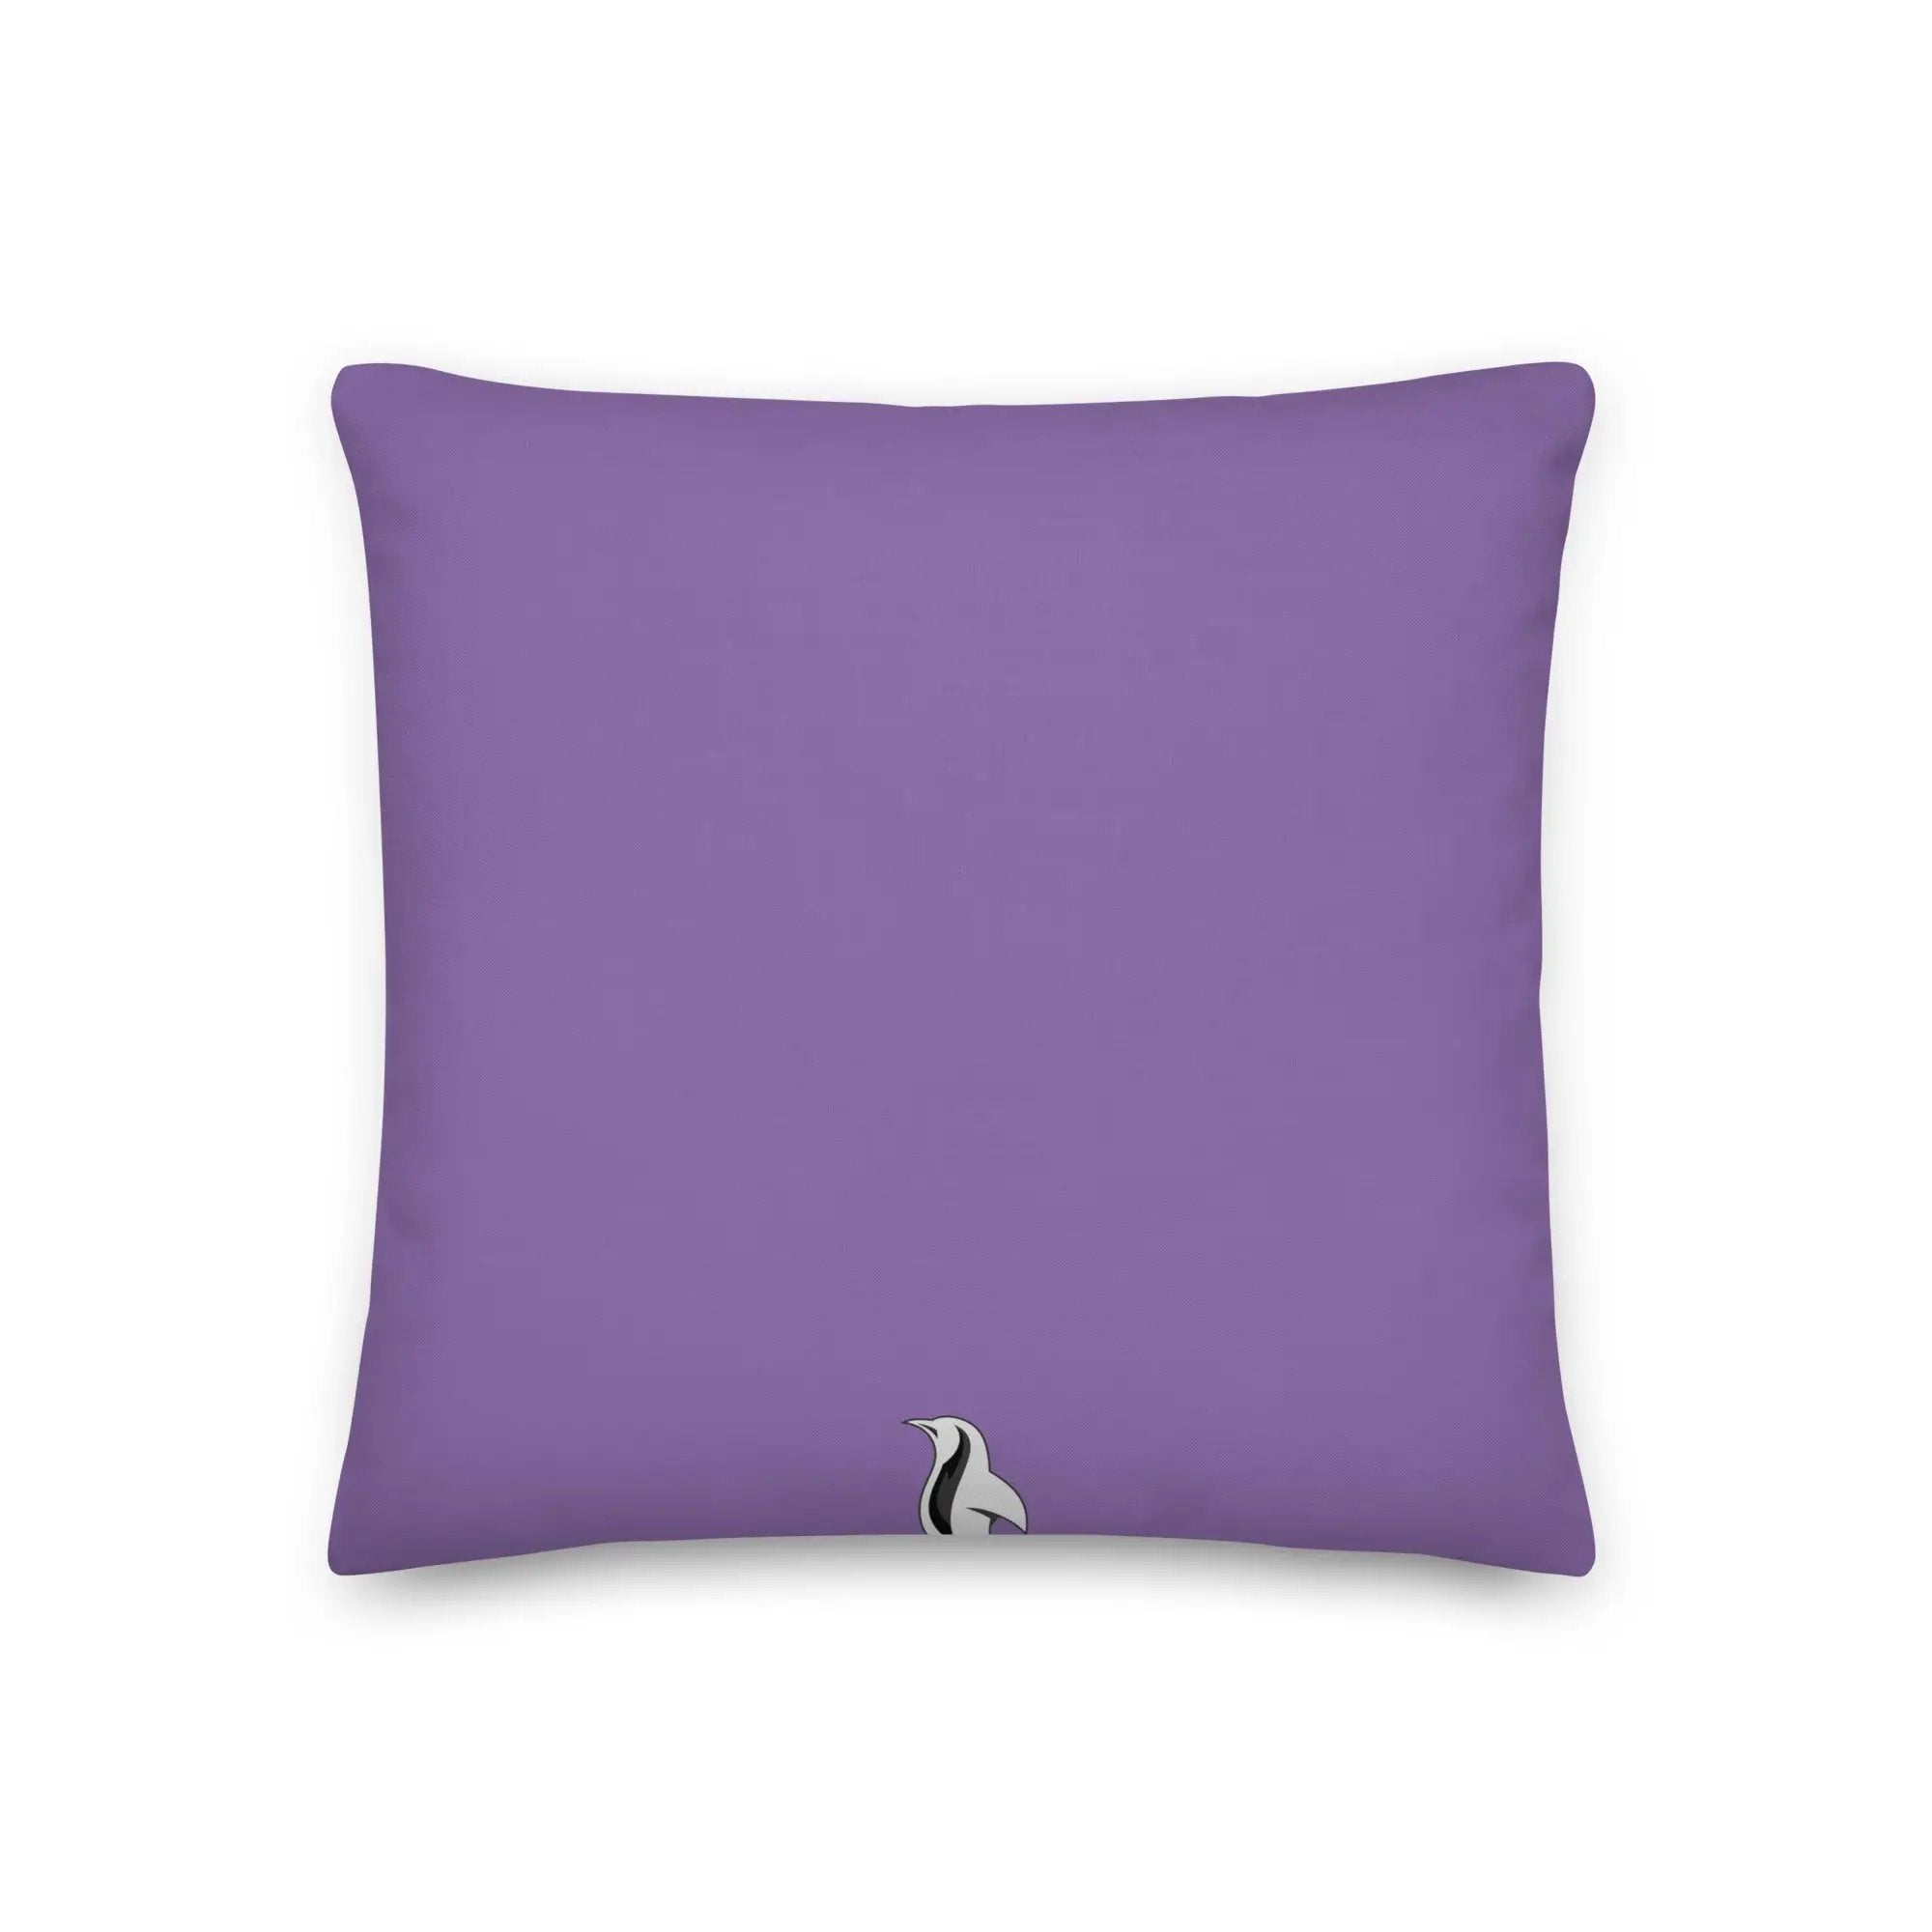 Panthor Premium Pillow